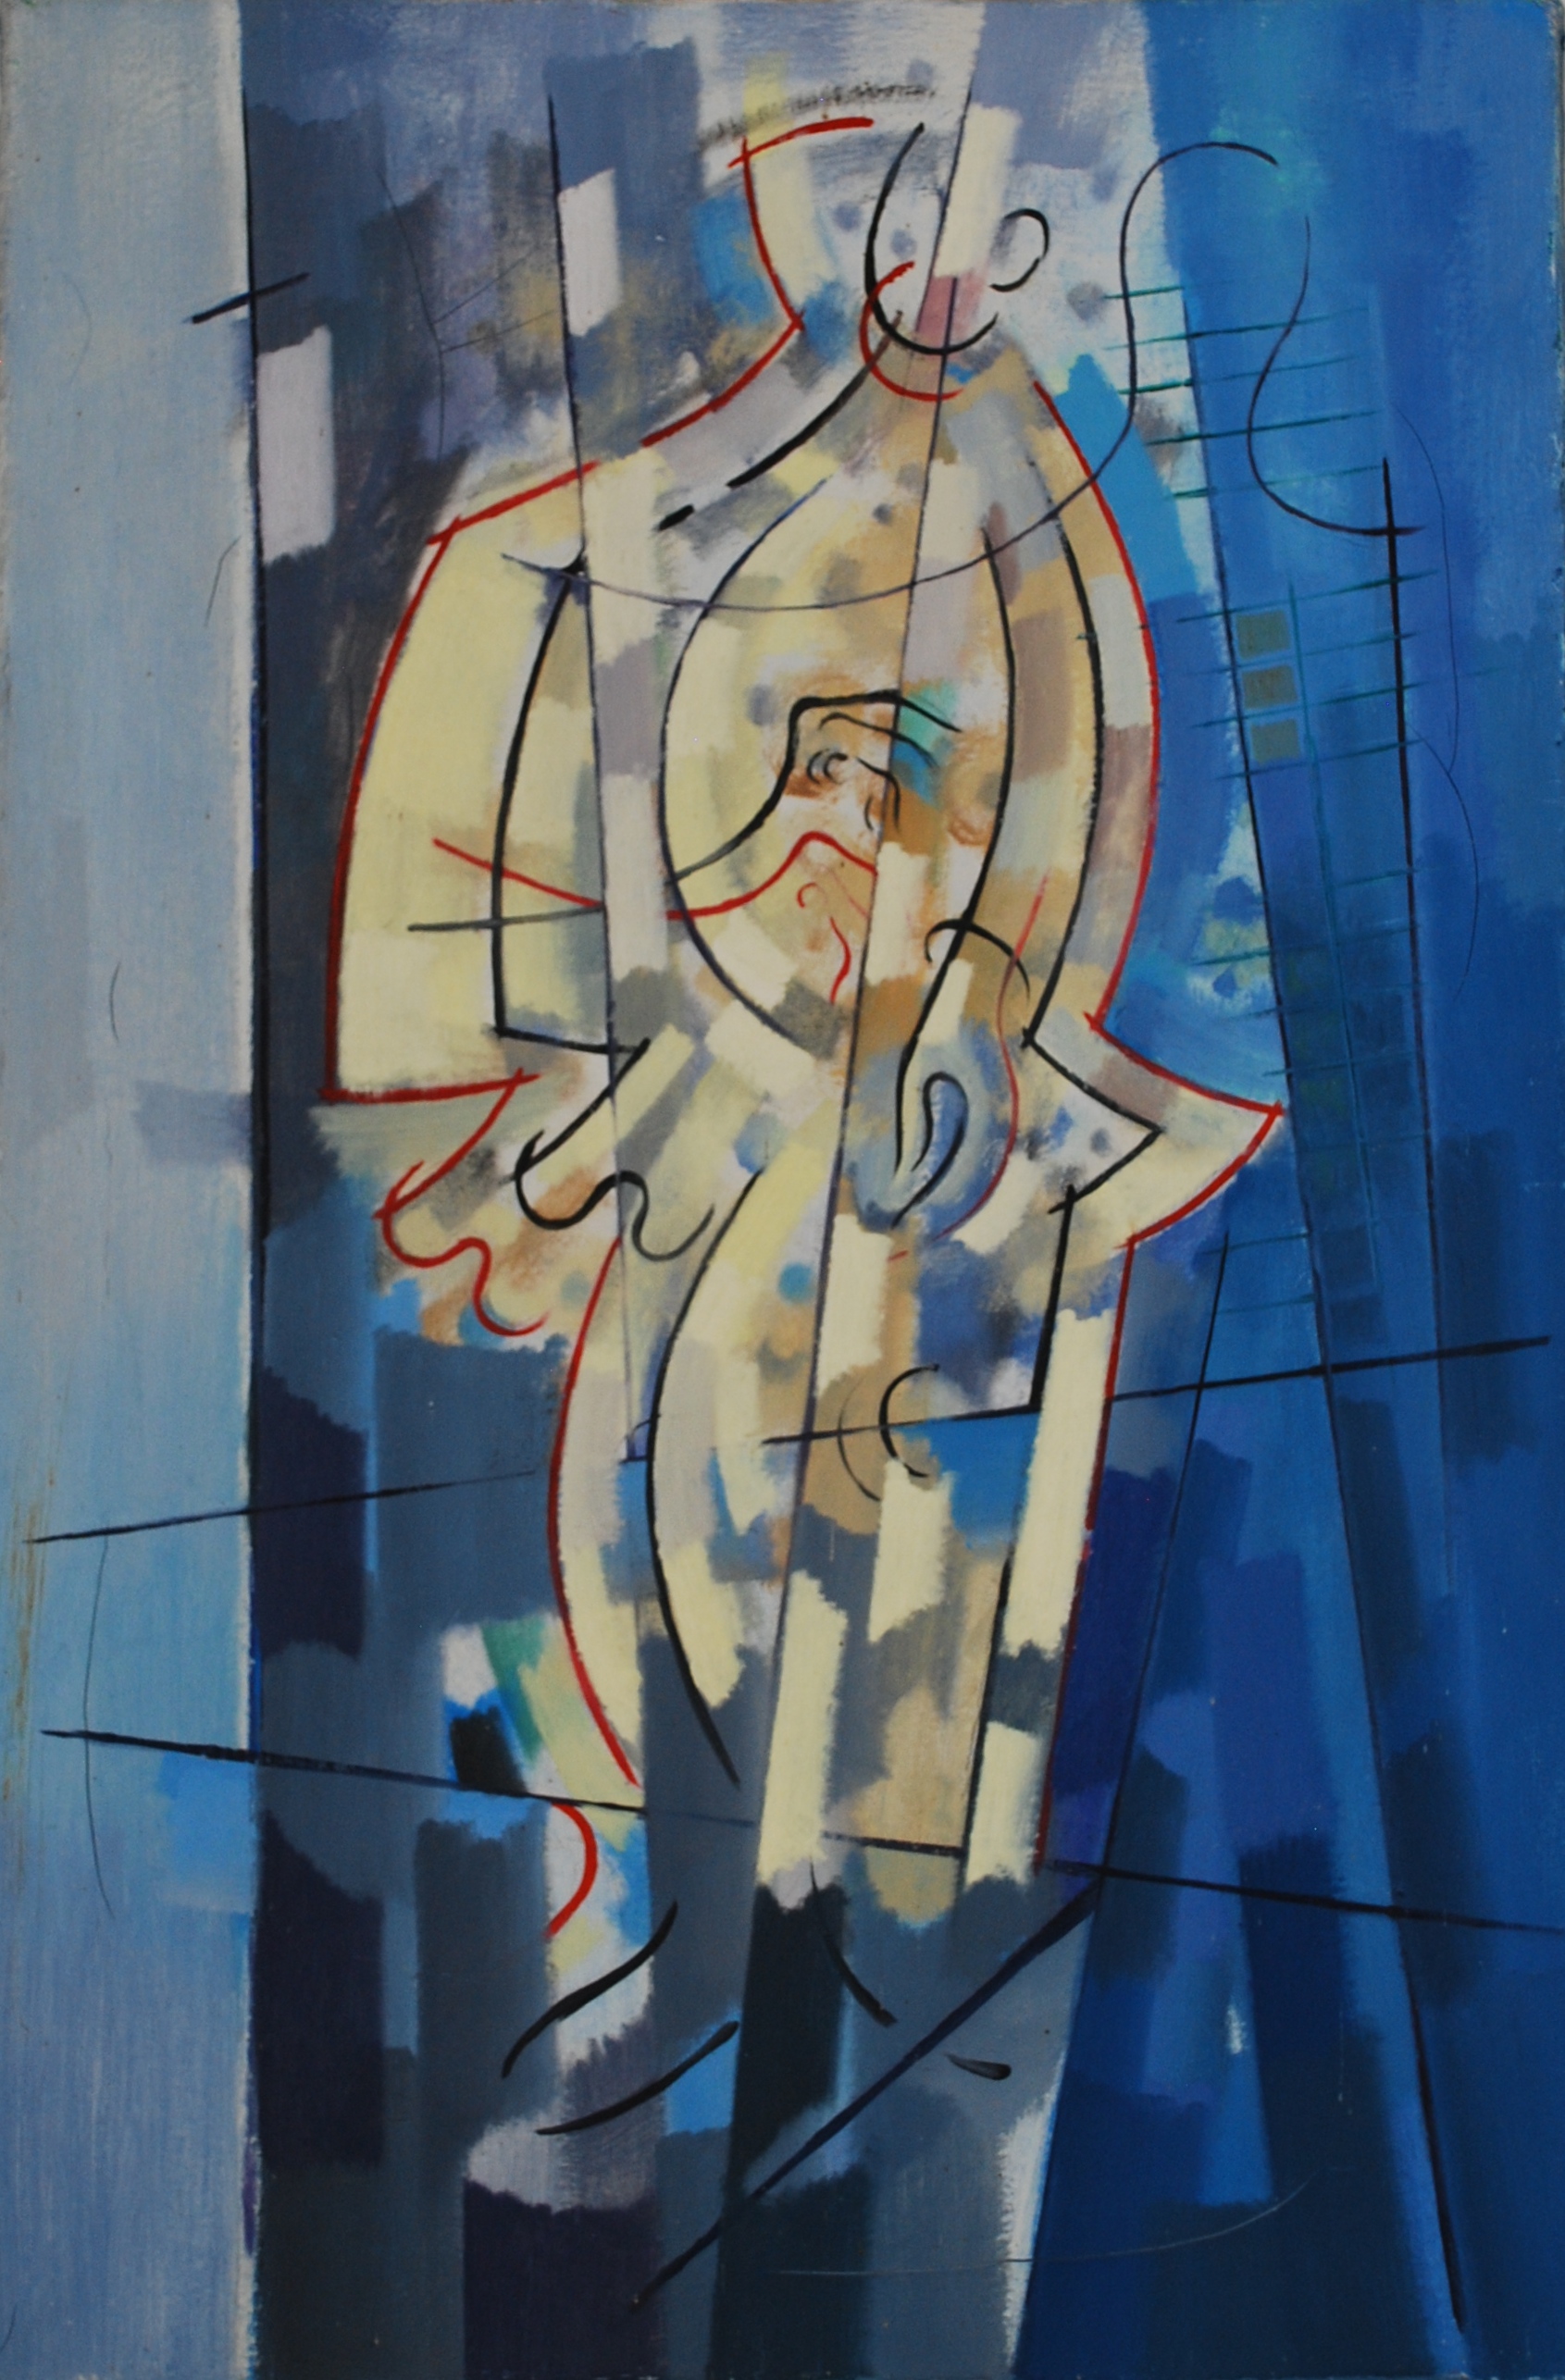  Single Figure, c1958 Oil on Canvas,&nbsp;51 x 76cm 